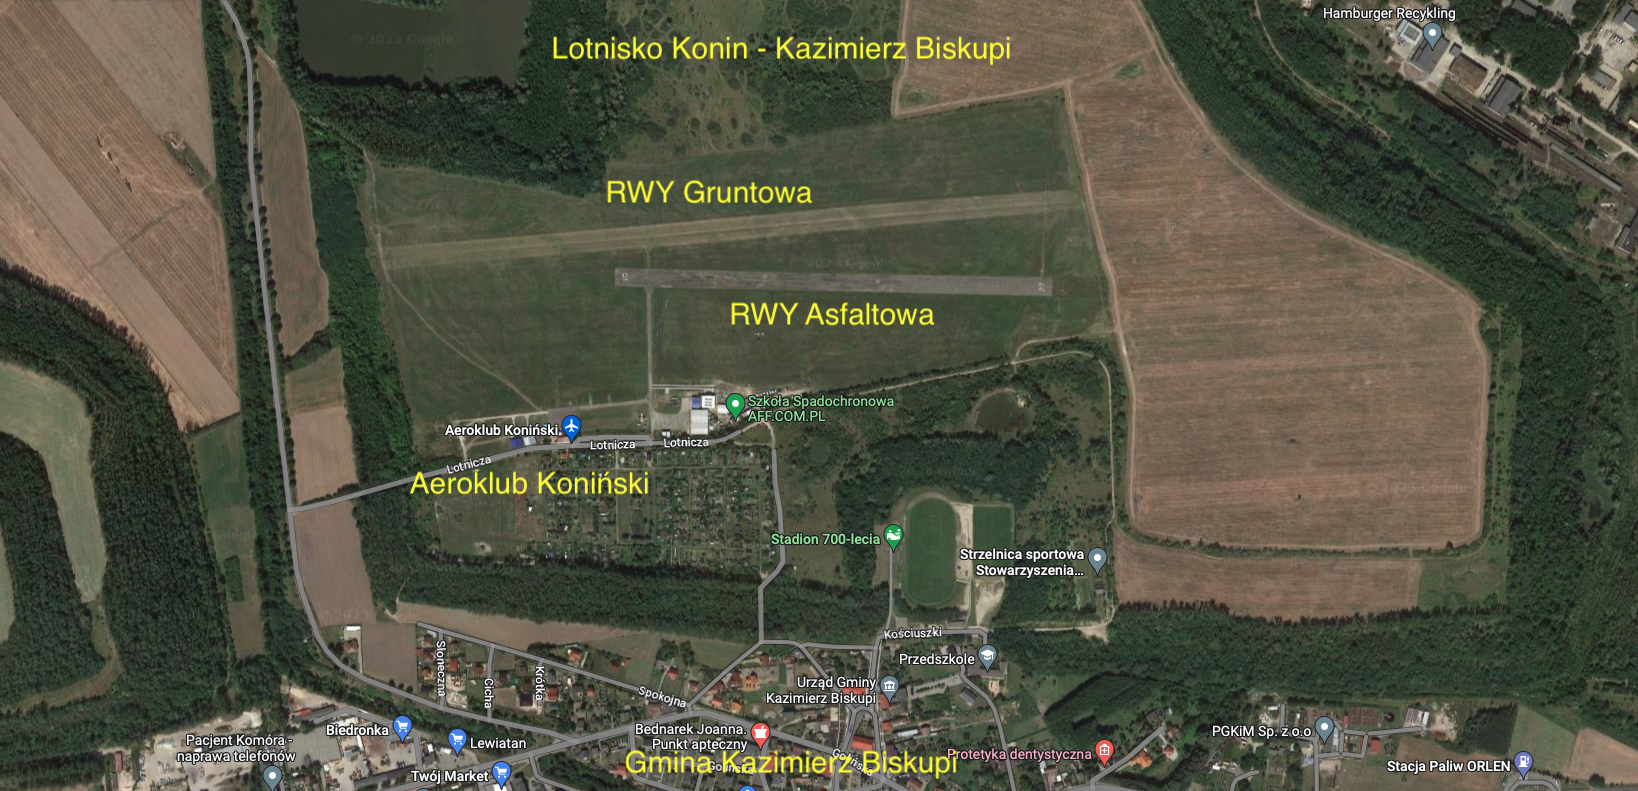 Kazimierz Biskupi airport. 2023. The work of Karol Placha Hetman